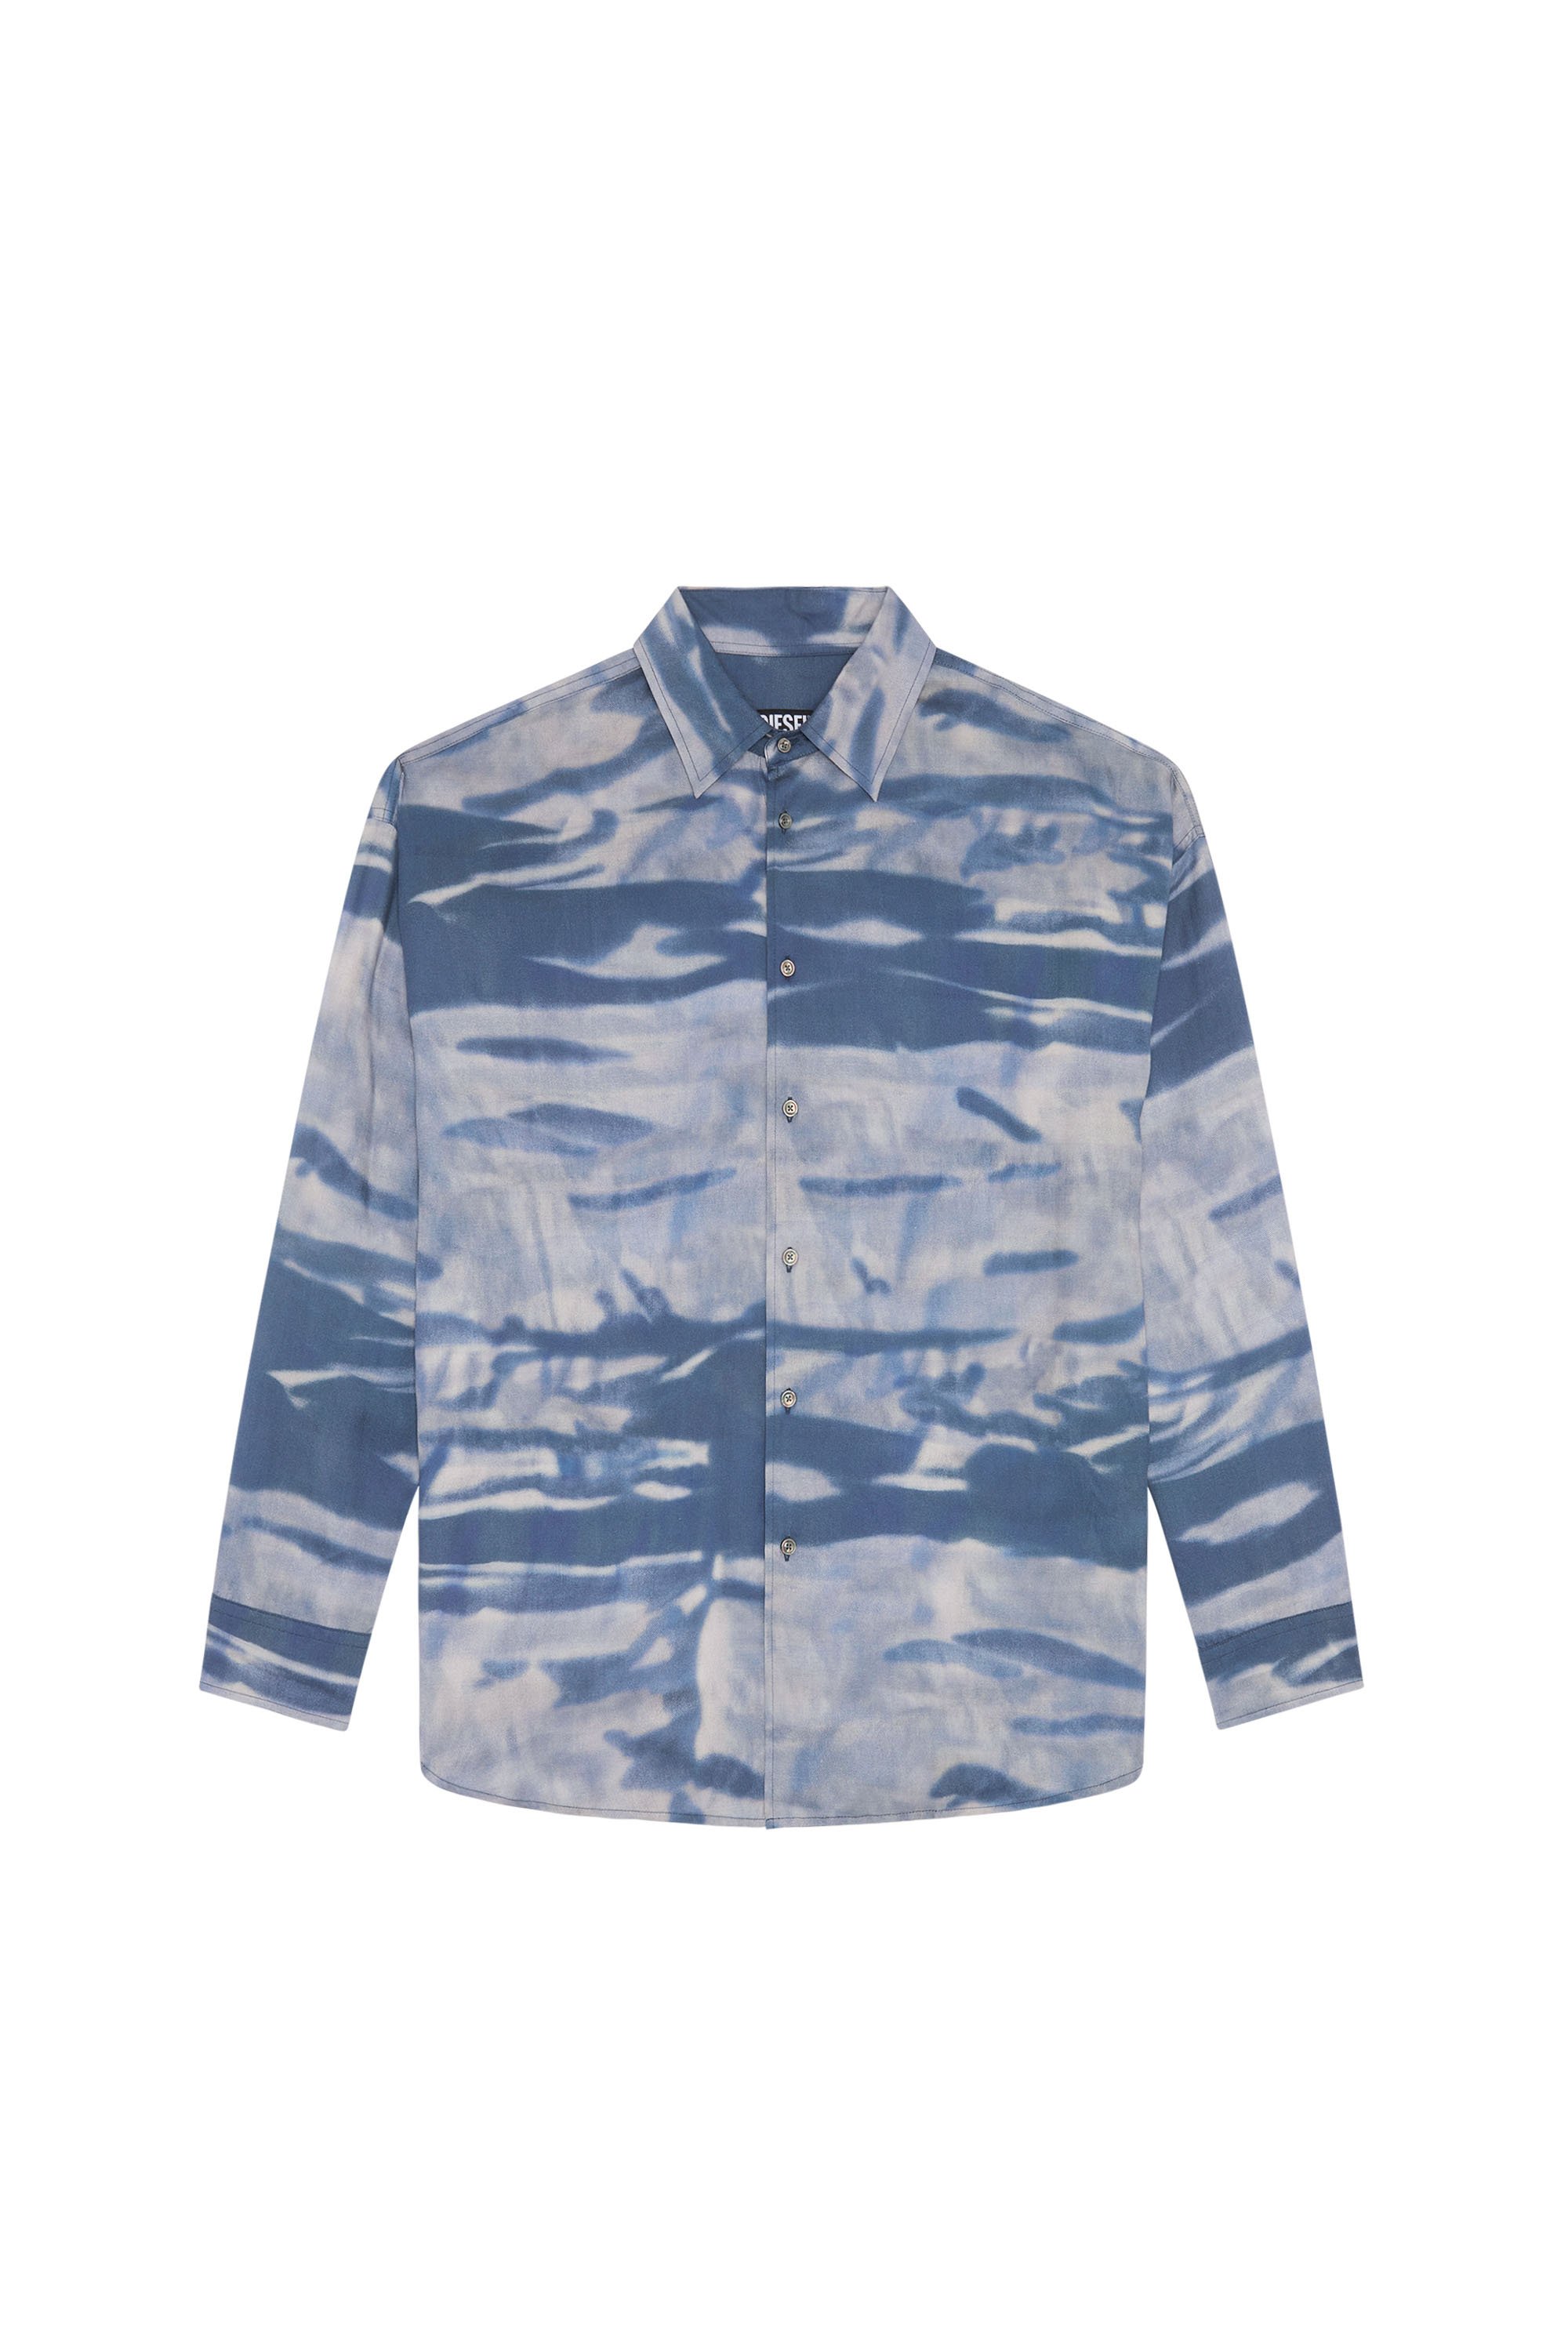 S-FLUID-CMF, Grau/Blau - Hemden